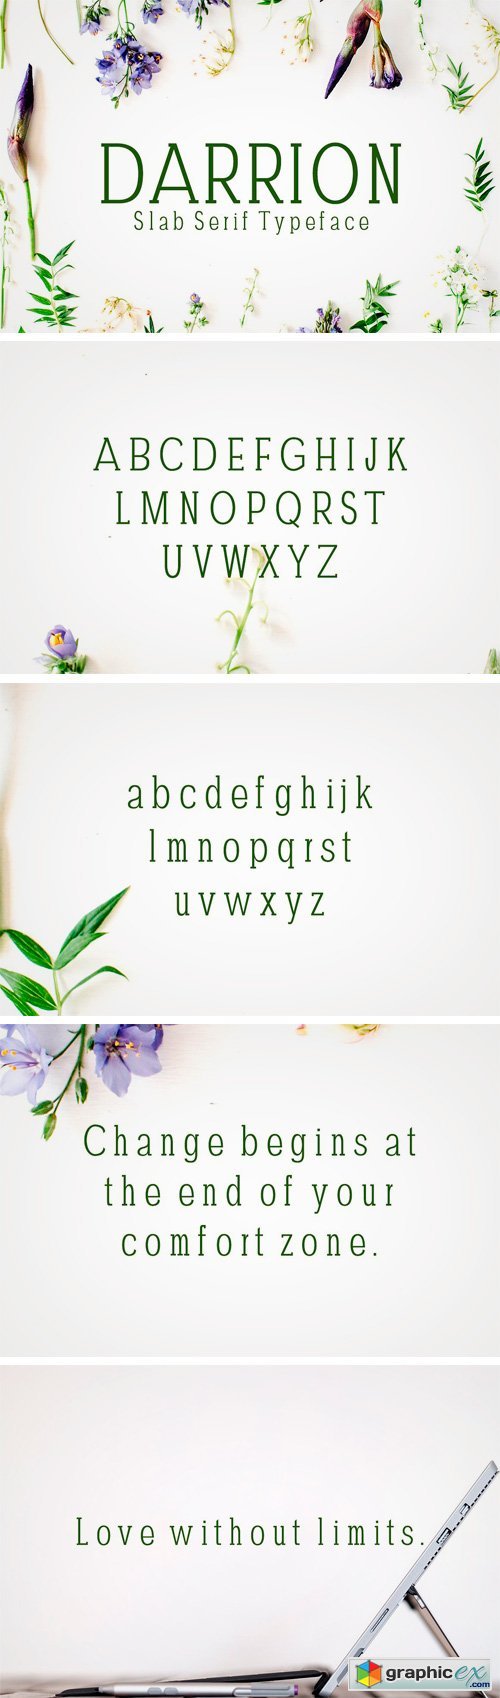 Darrion Slab Serif Typeface